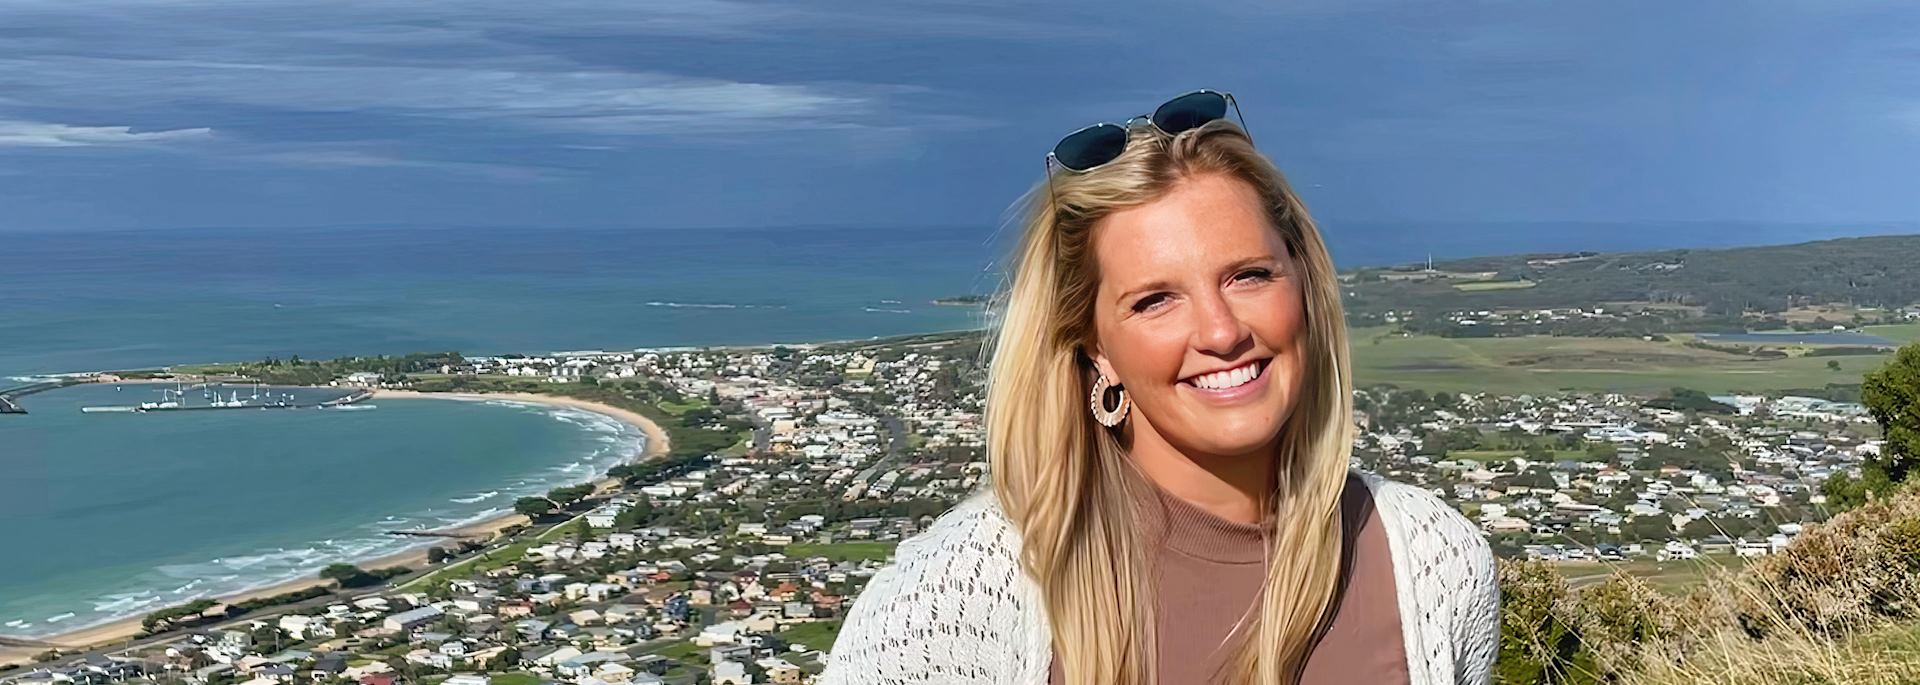 Haley at Apollo bay, Australia